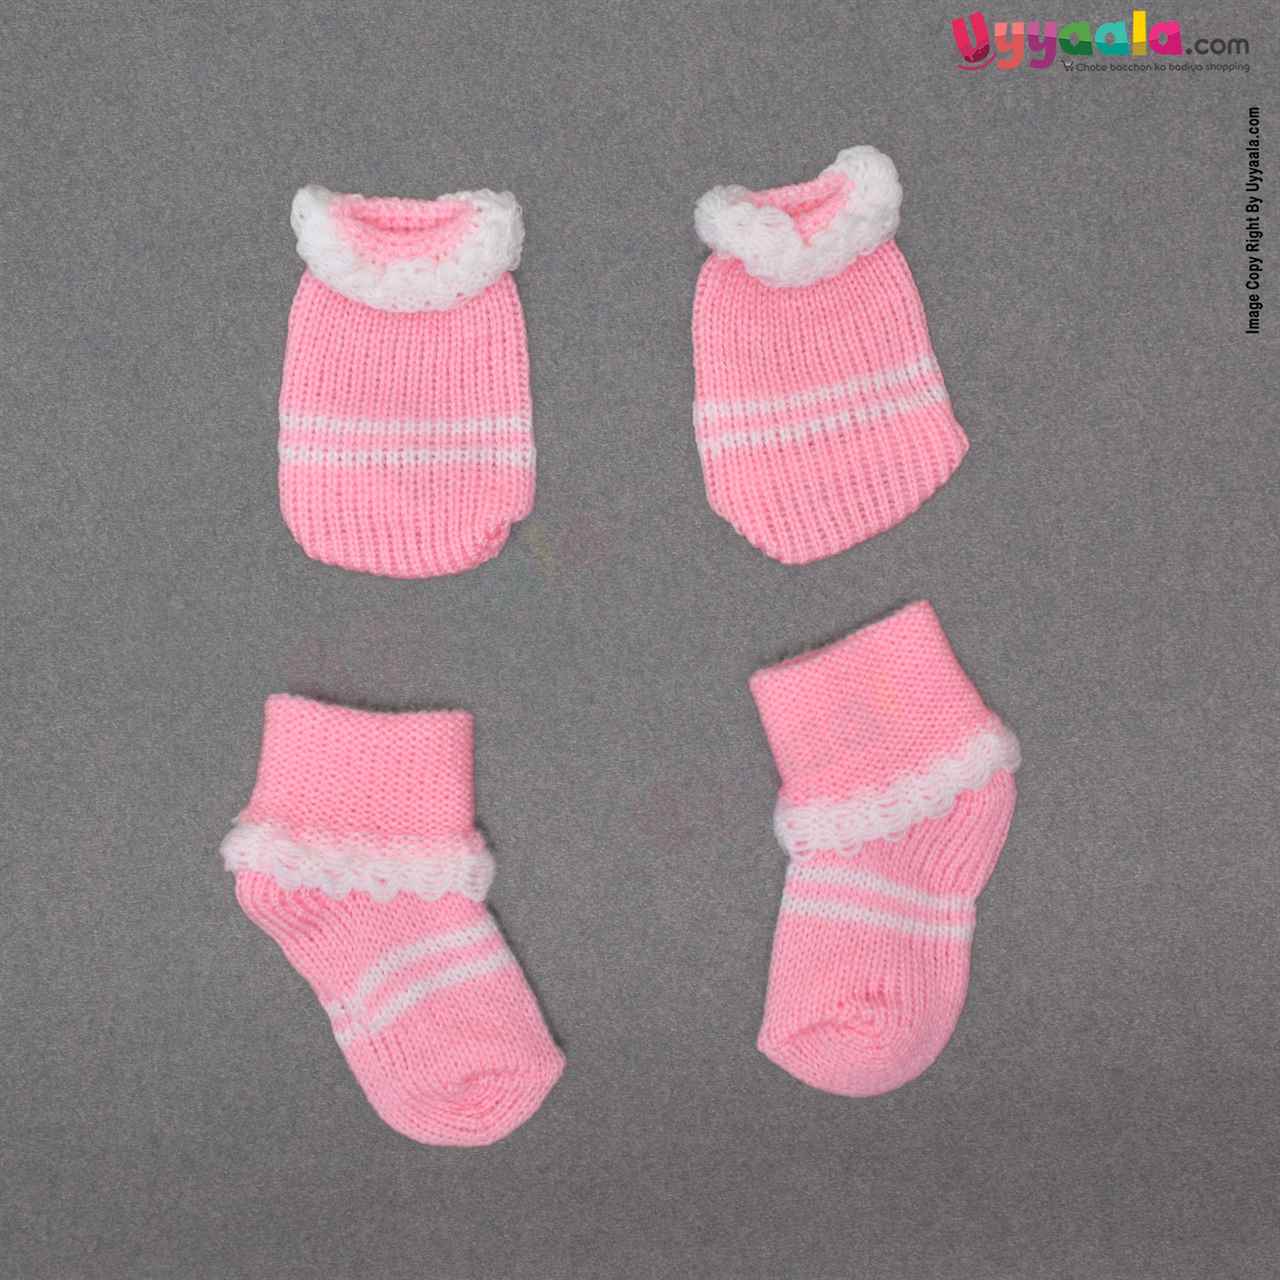 Woolen Hand Knitted Cap, Mittens & Booties Set For Newborn Babies - Pink & White 0-3m